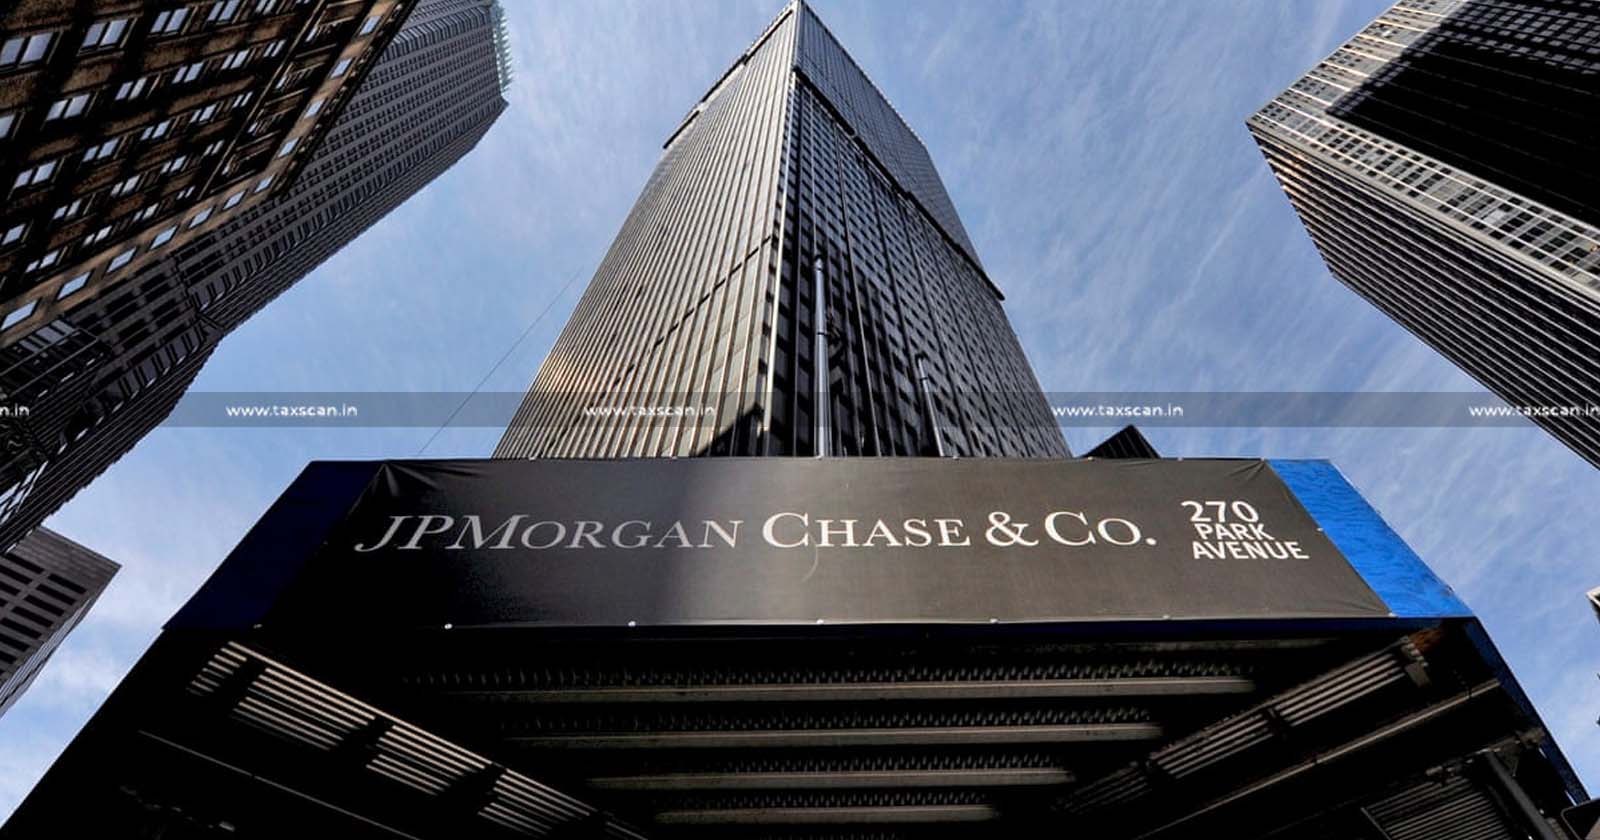 JPMorgan Chase & Co - taxscan - jobscan